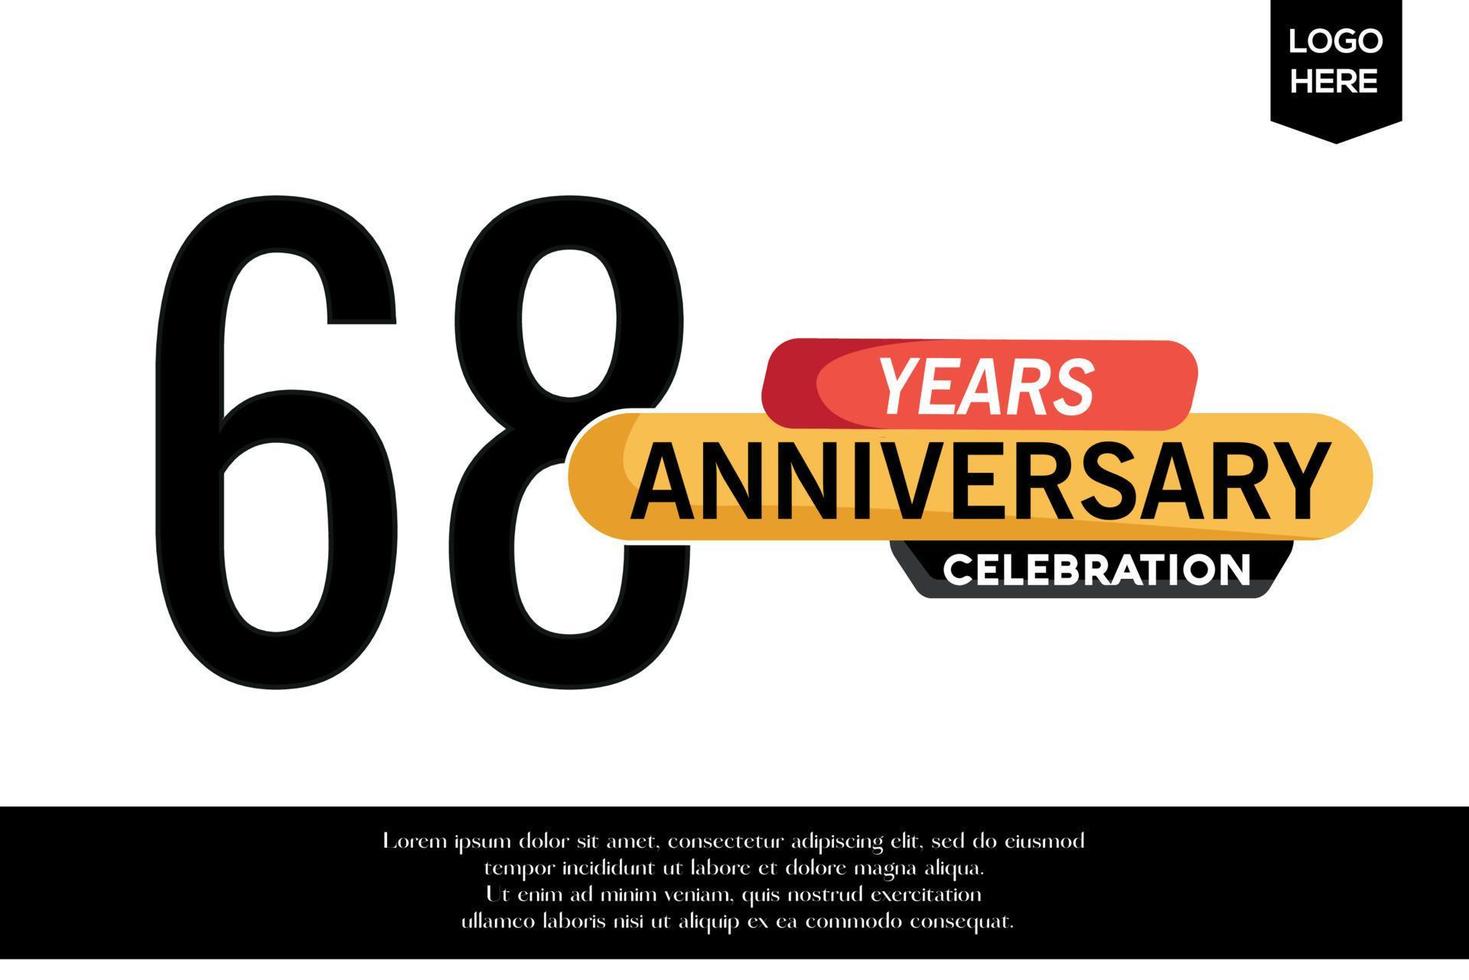 68º aniversario celebracion logotipo negro amarillo de colores con texto en gris color aislado en blanco antecedentes vector modelo diseño